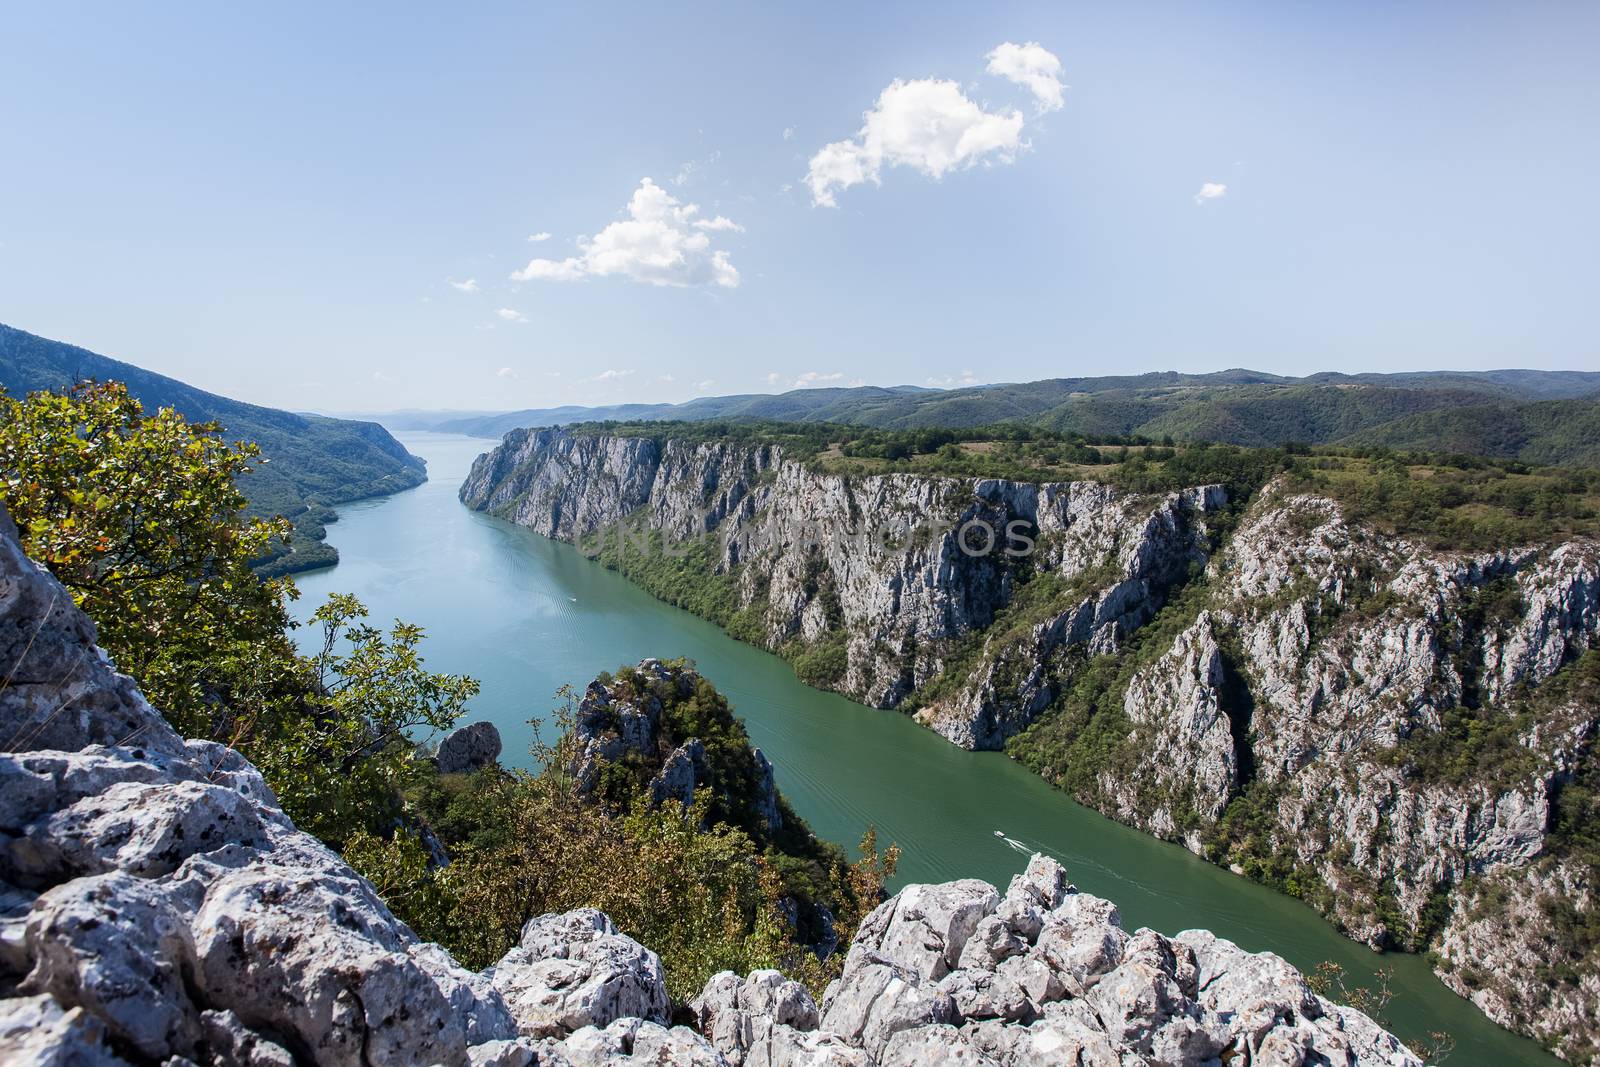 Danube gorge by Slast20